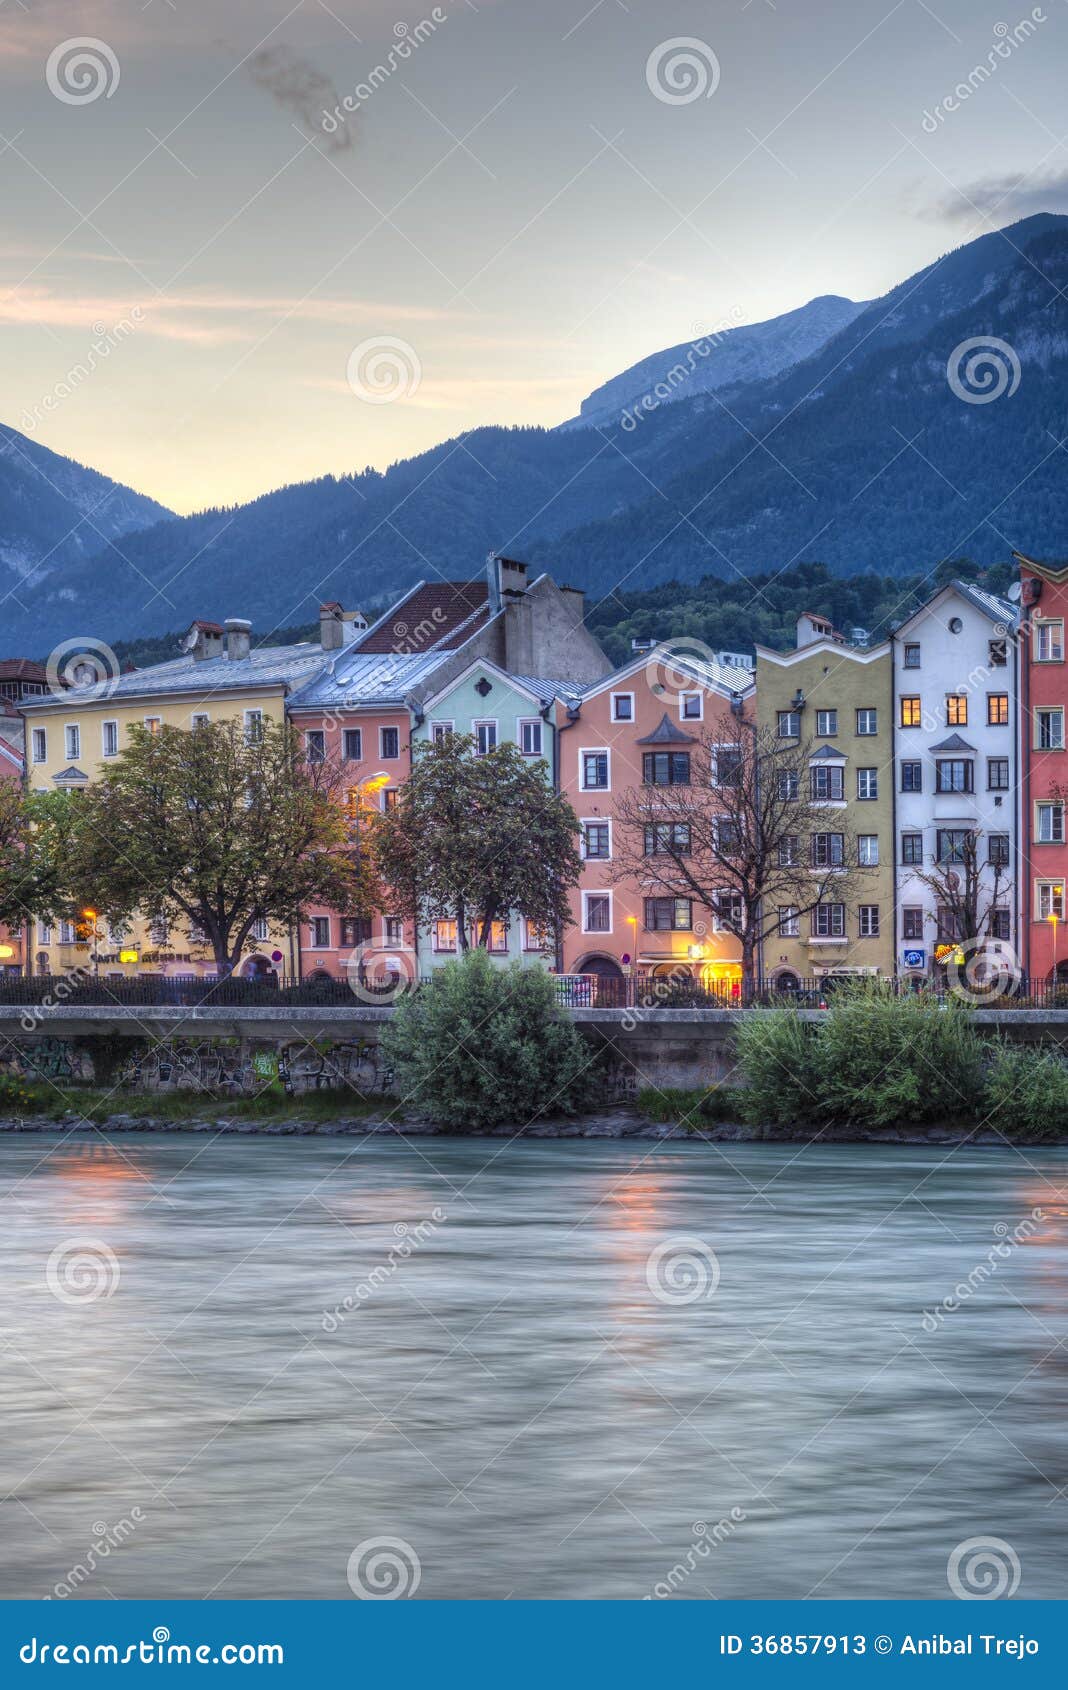 Inn River On Its Way Through Innsbruck, Austria. Editorial